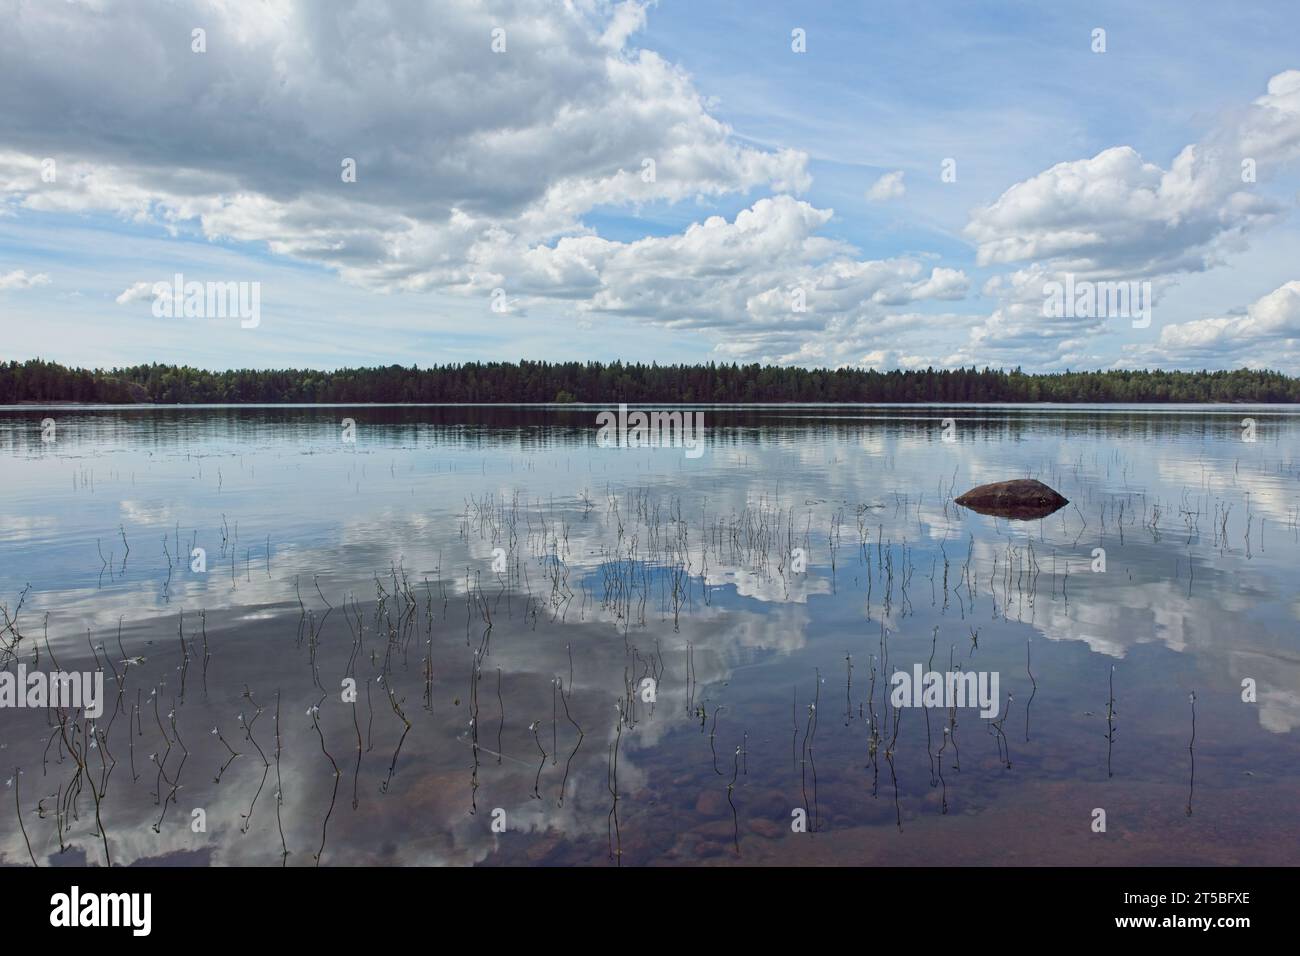 Landscape view of lake Meiko with cloudy sky reflecting on lake surface, Meiko nature reserve, Kirkkonummi, Finland. Stock Photo